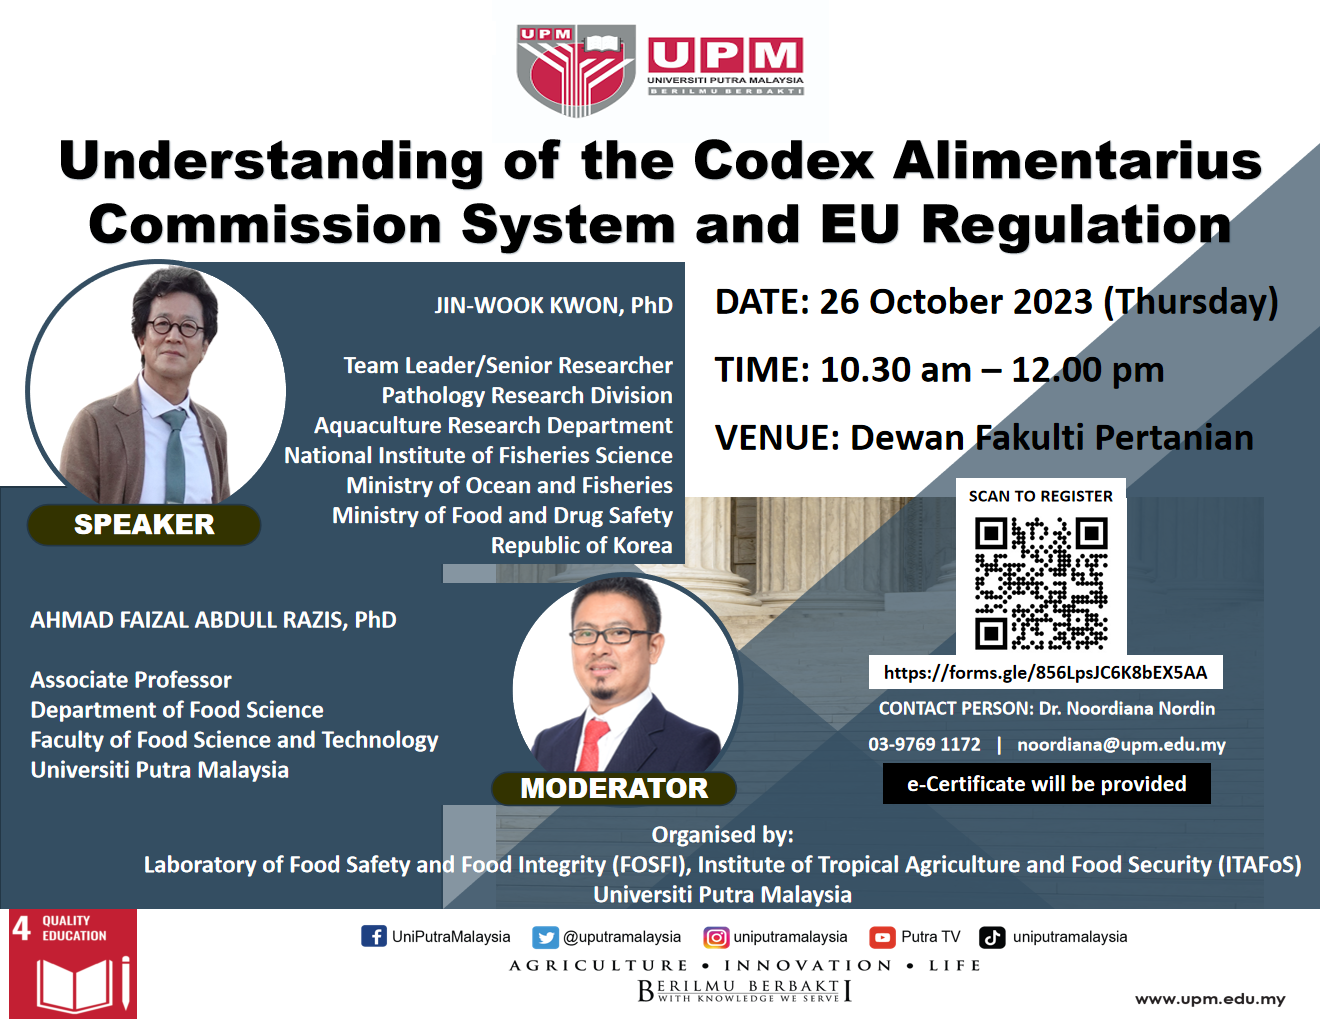 Seminar Series 1/2023: Understanding of the Codex Alimentarius Commission System and EU Regulation